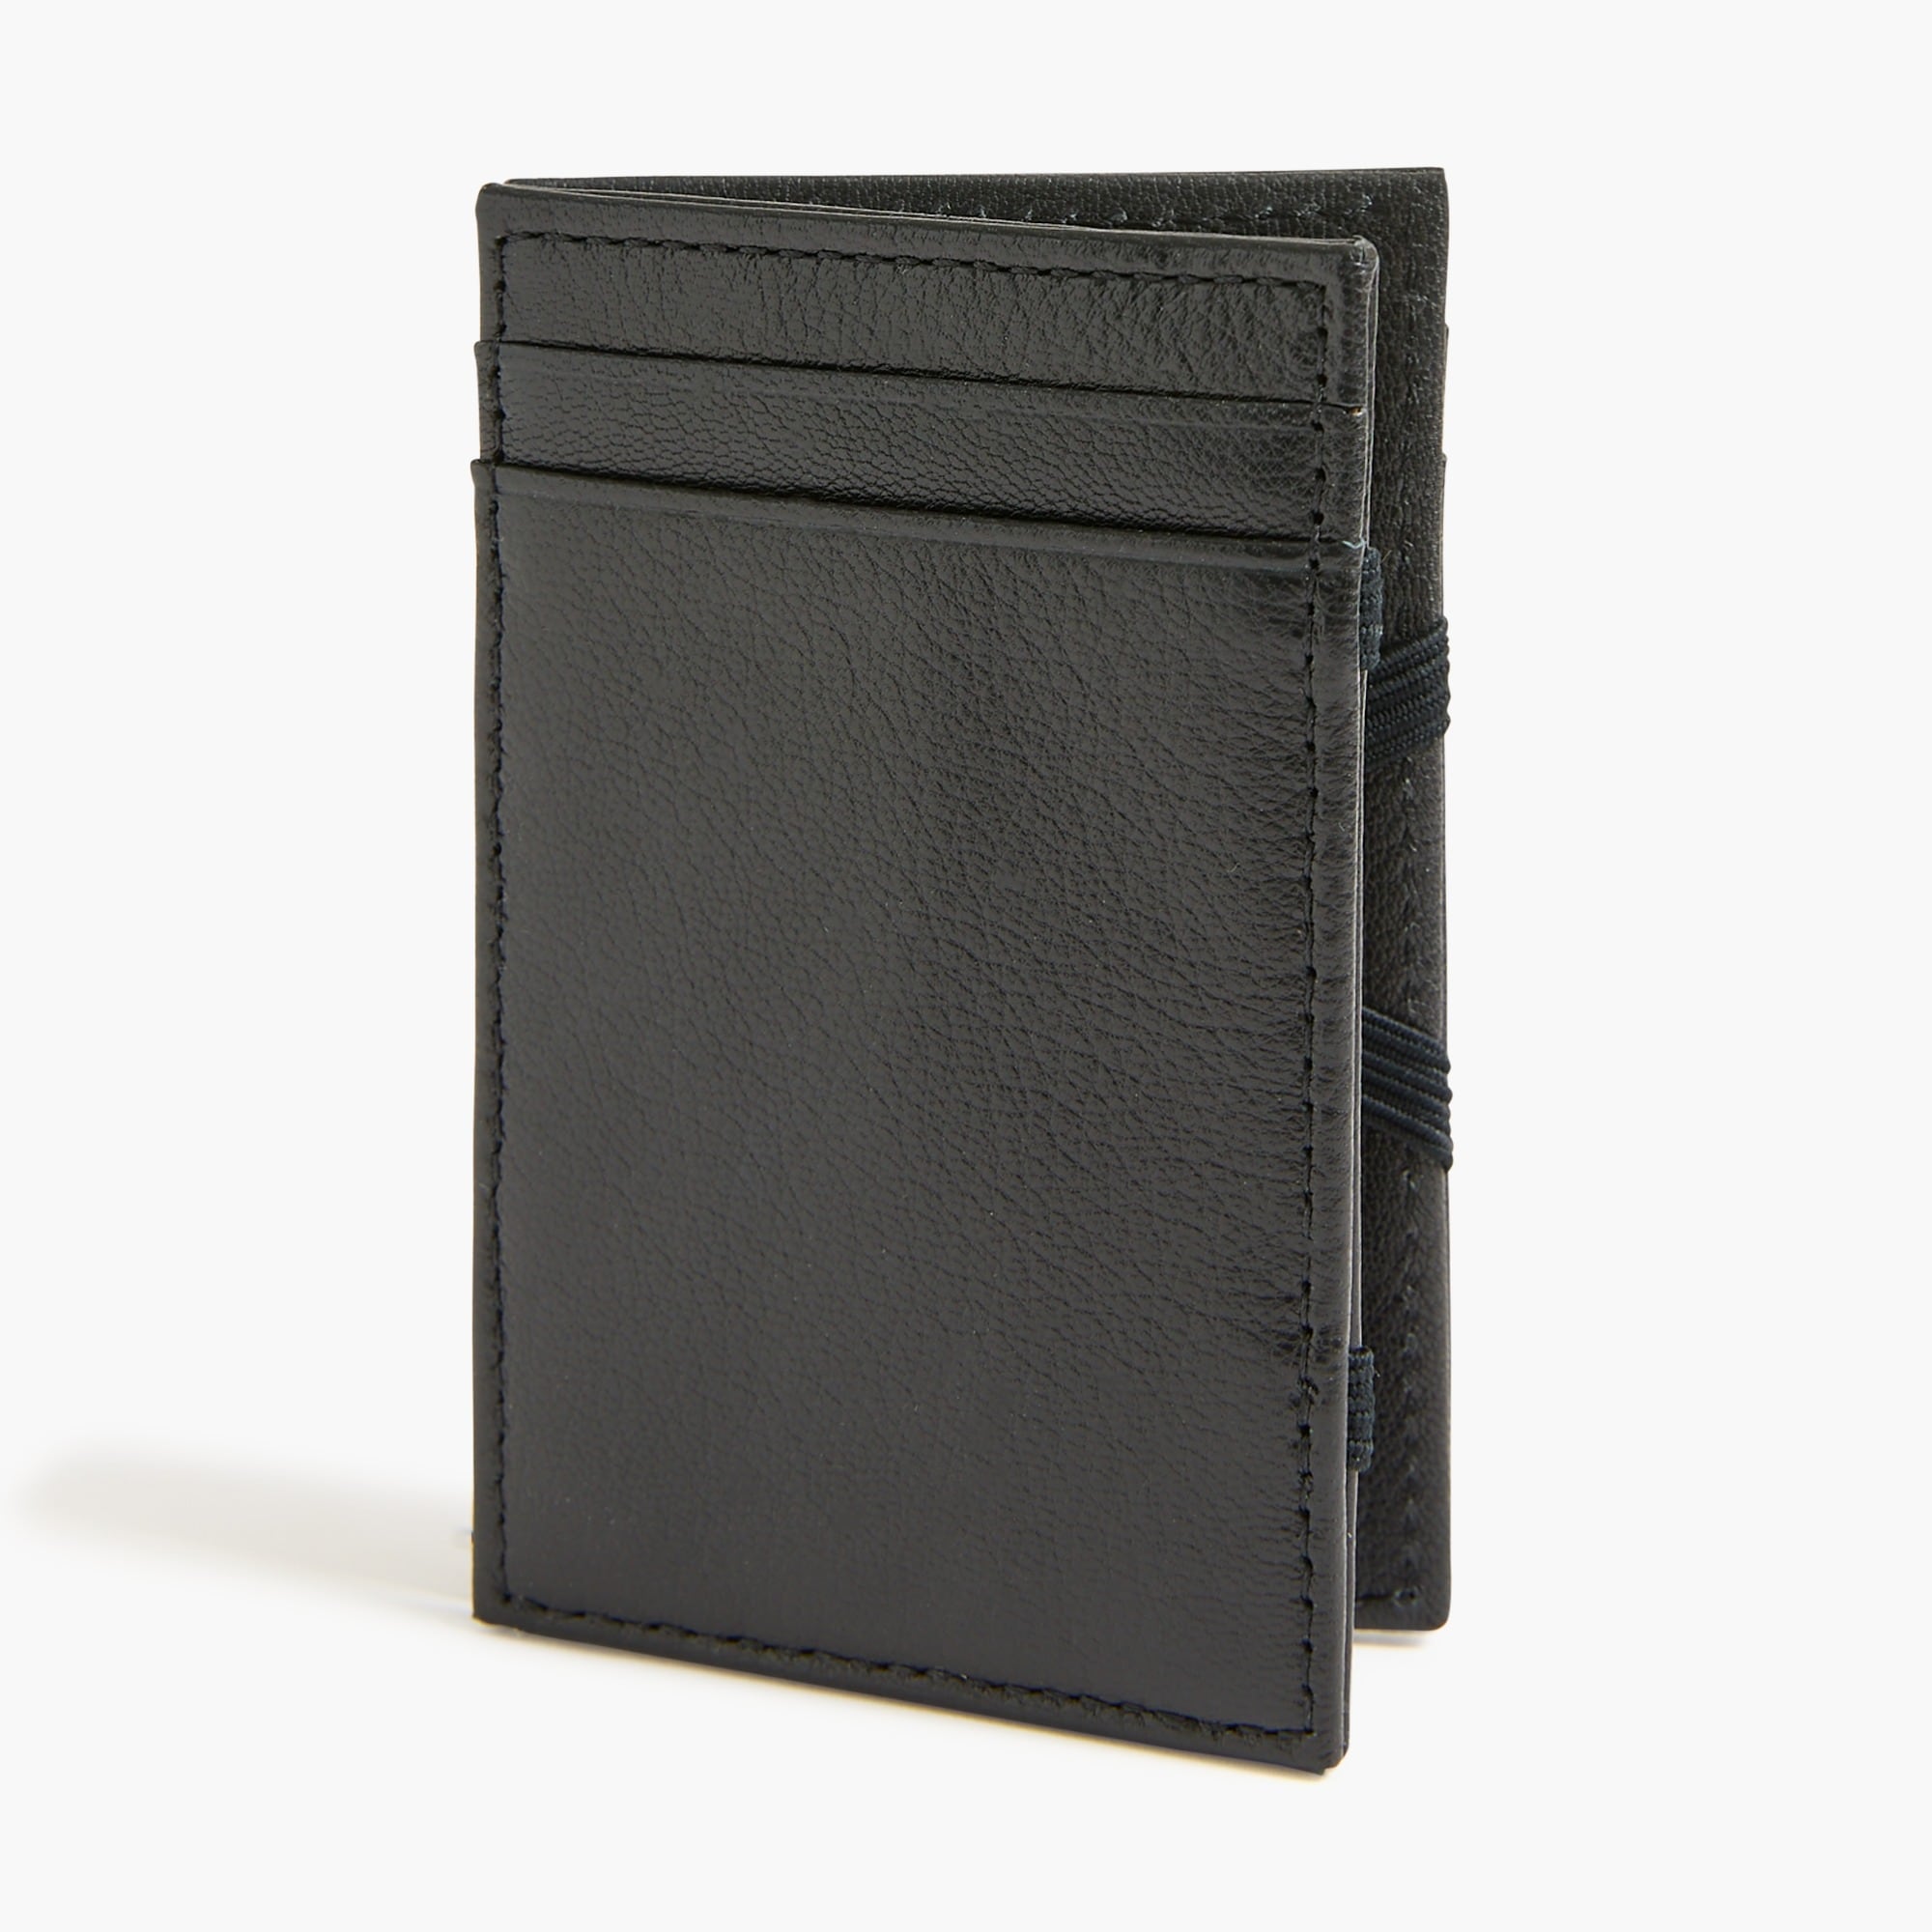 Jcrew Pebbled leather wallet